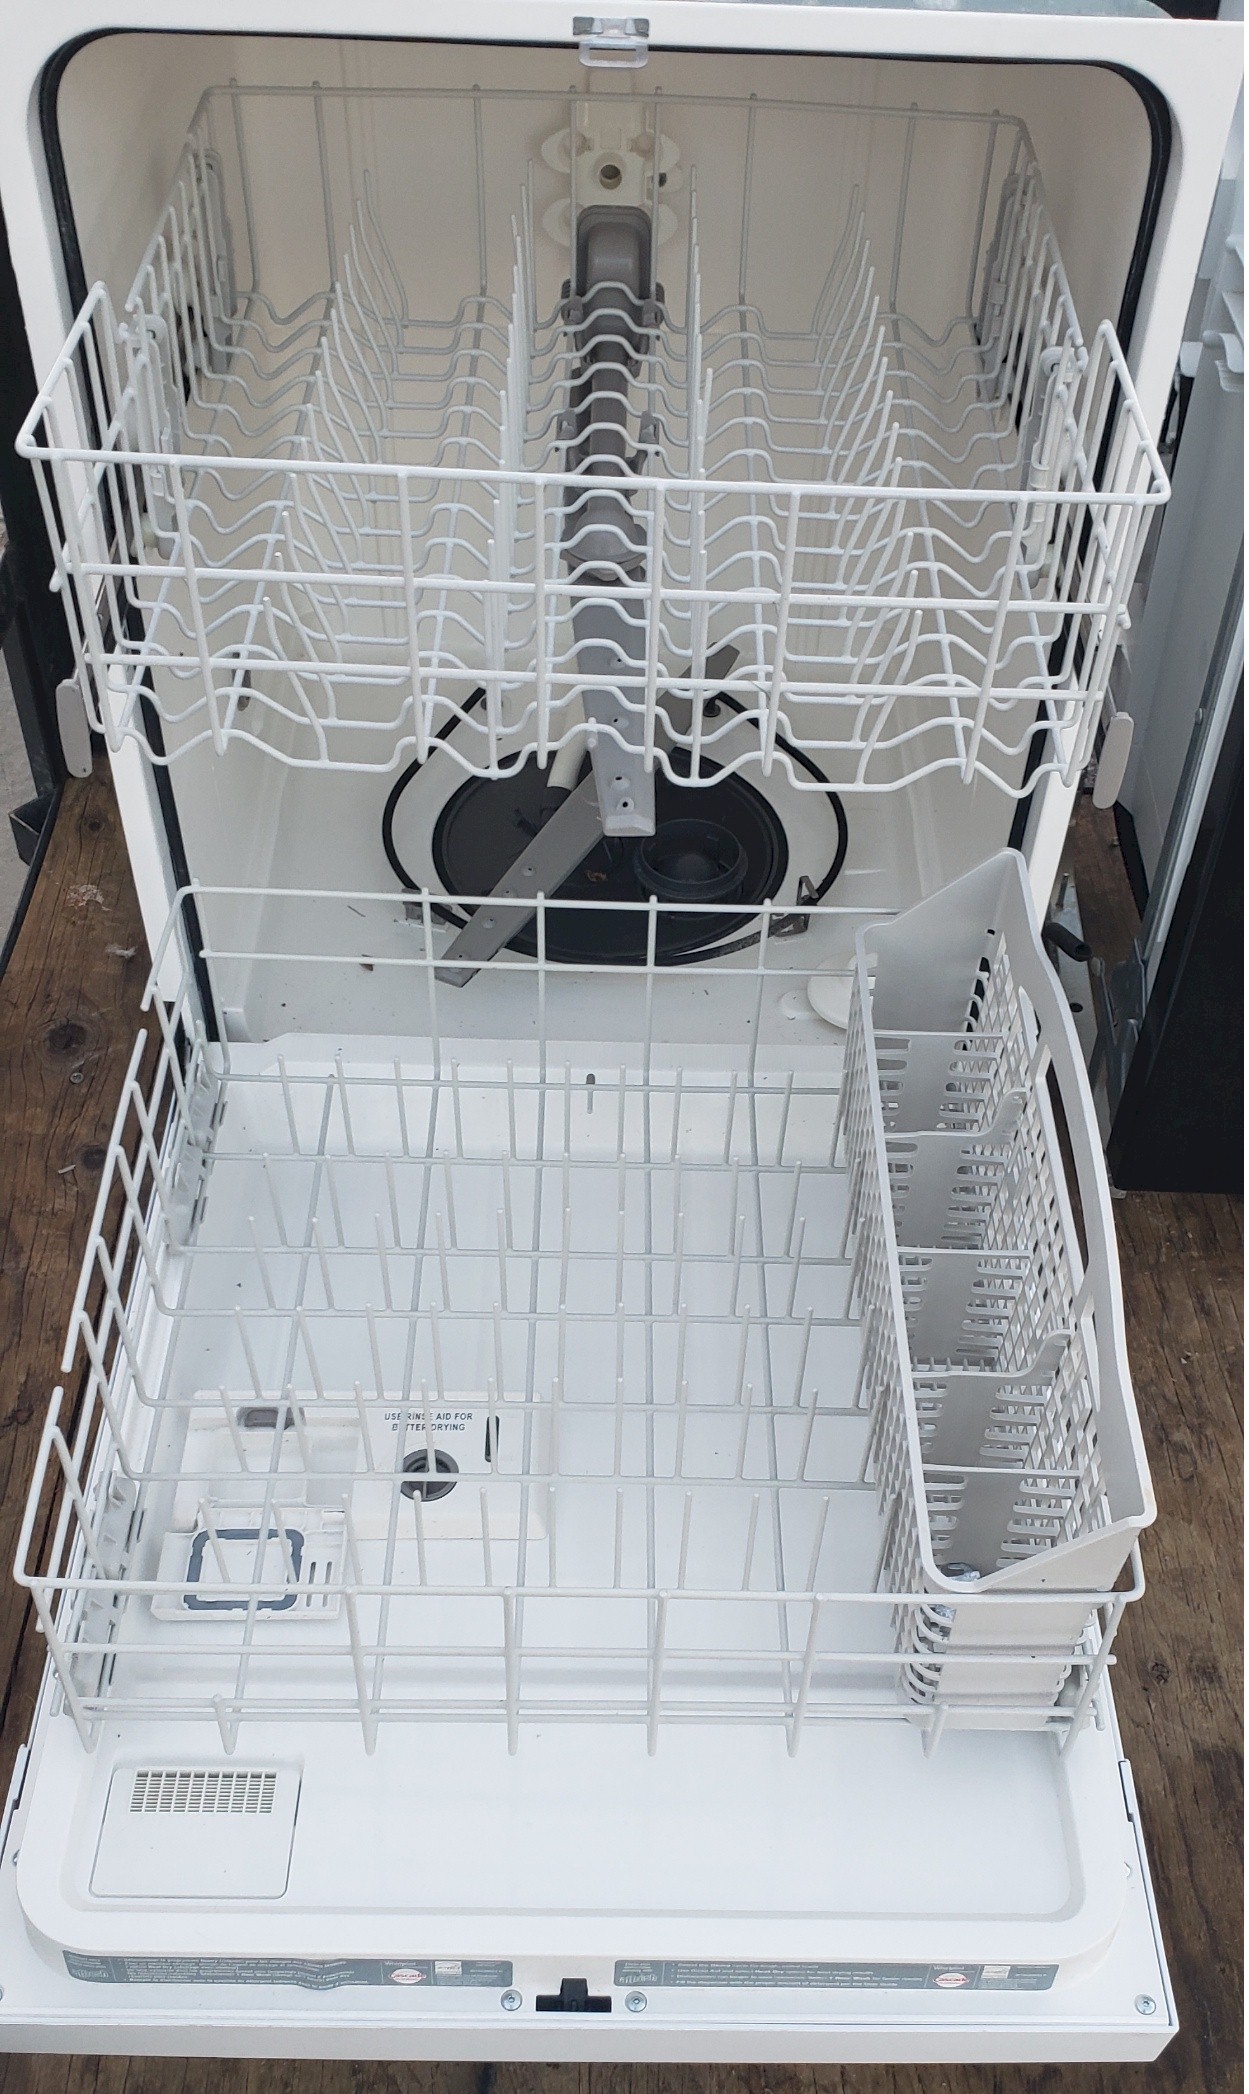 1 White Whirlpool Dishwasher inside